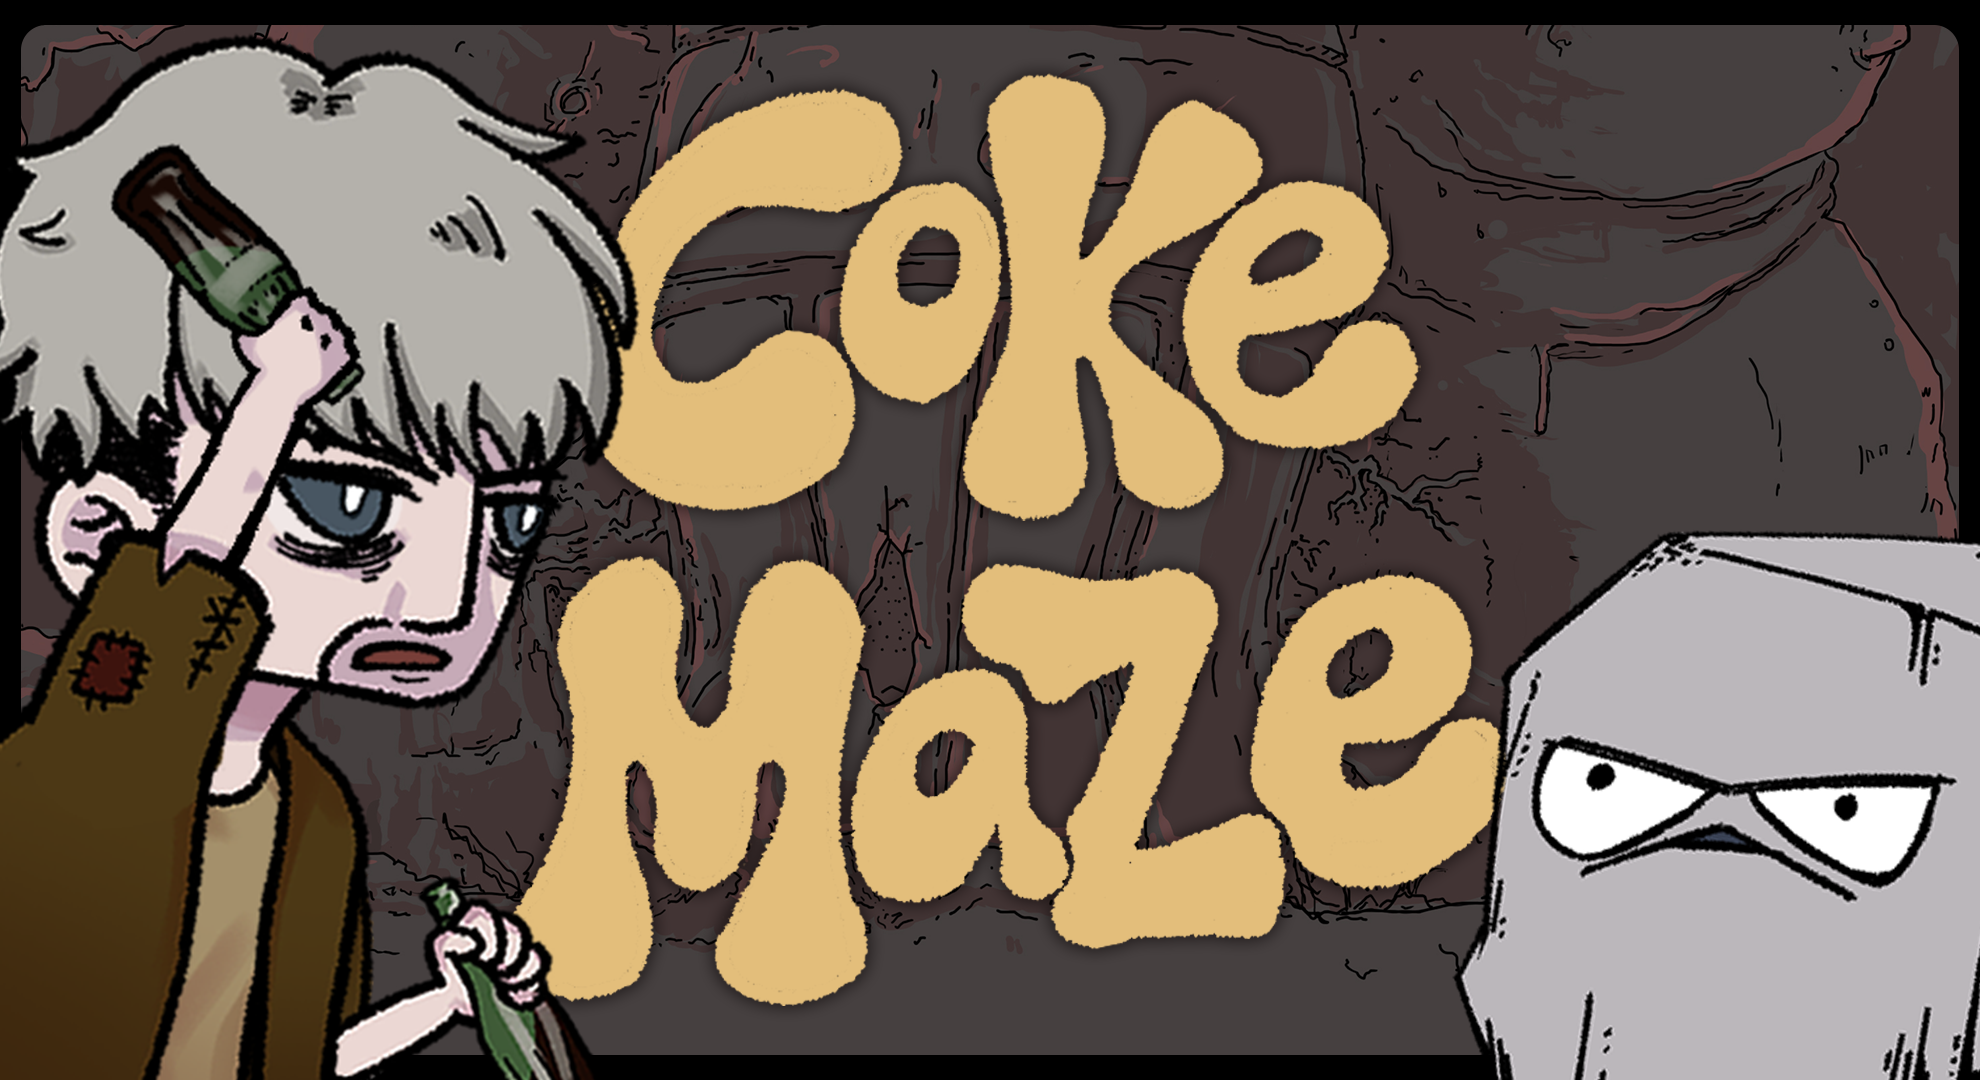 Coke Maze